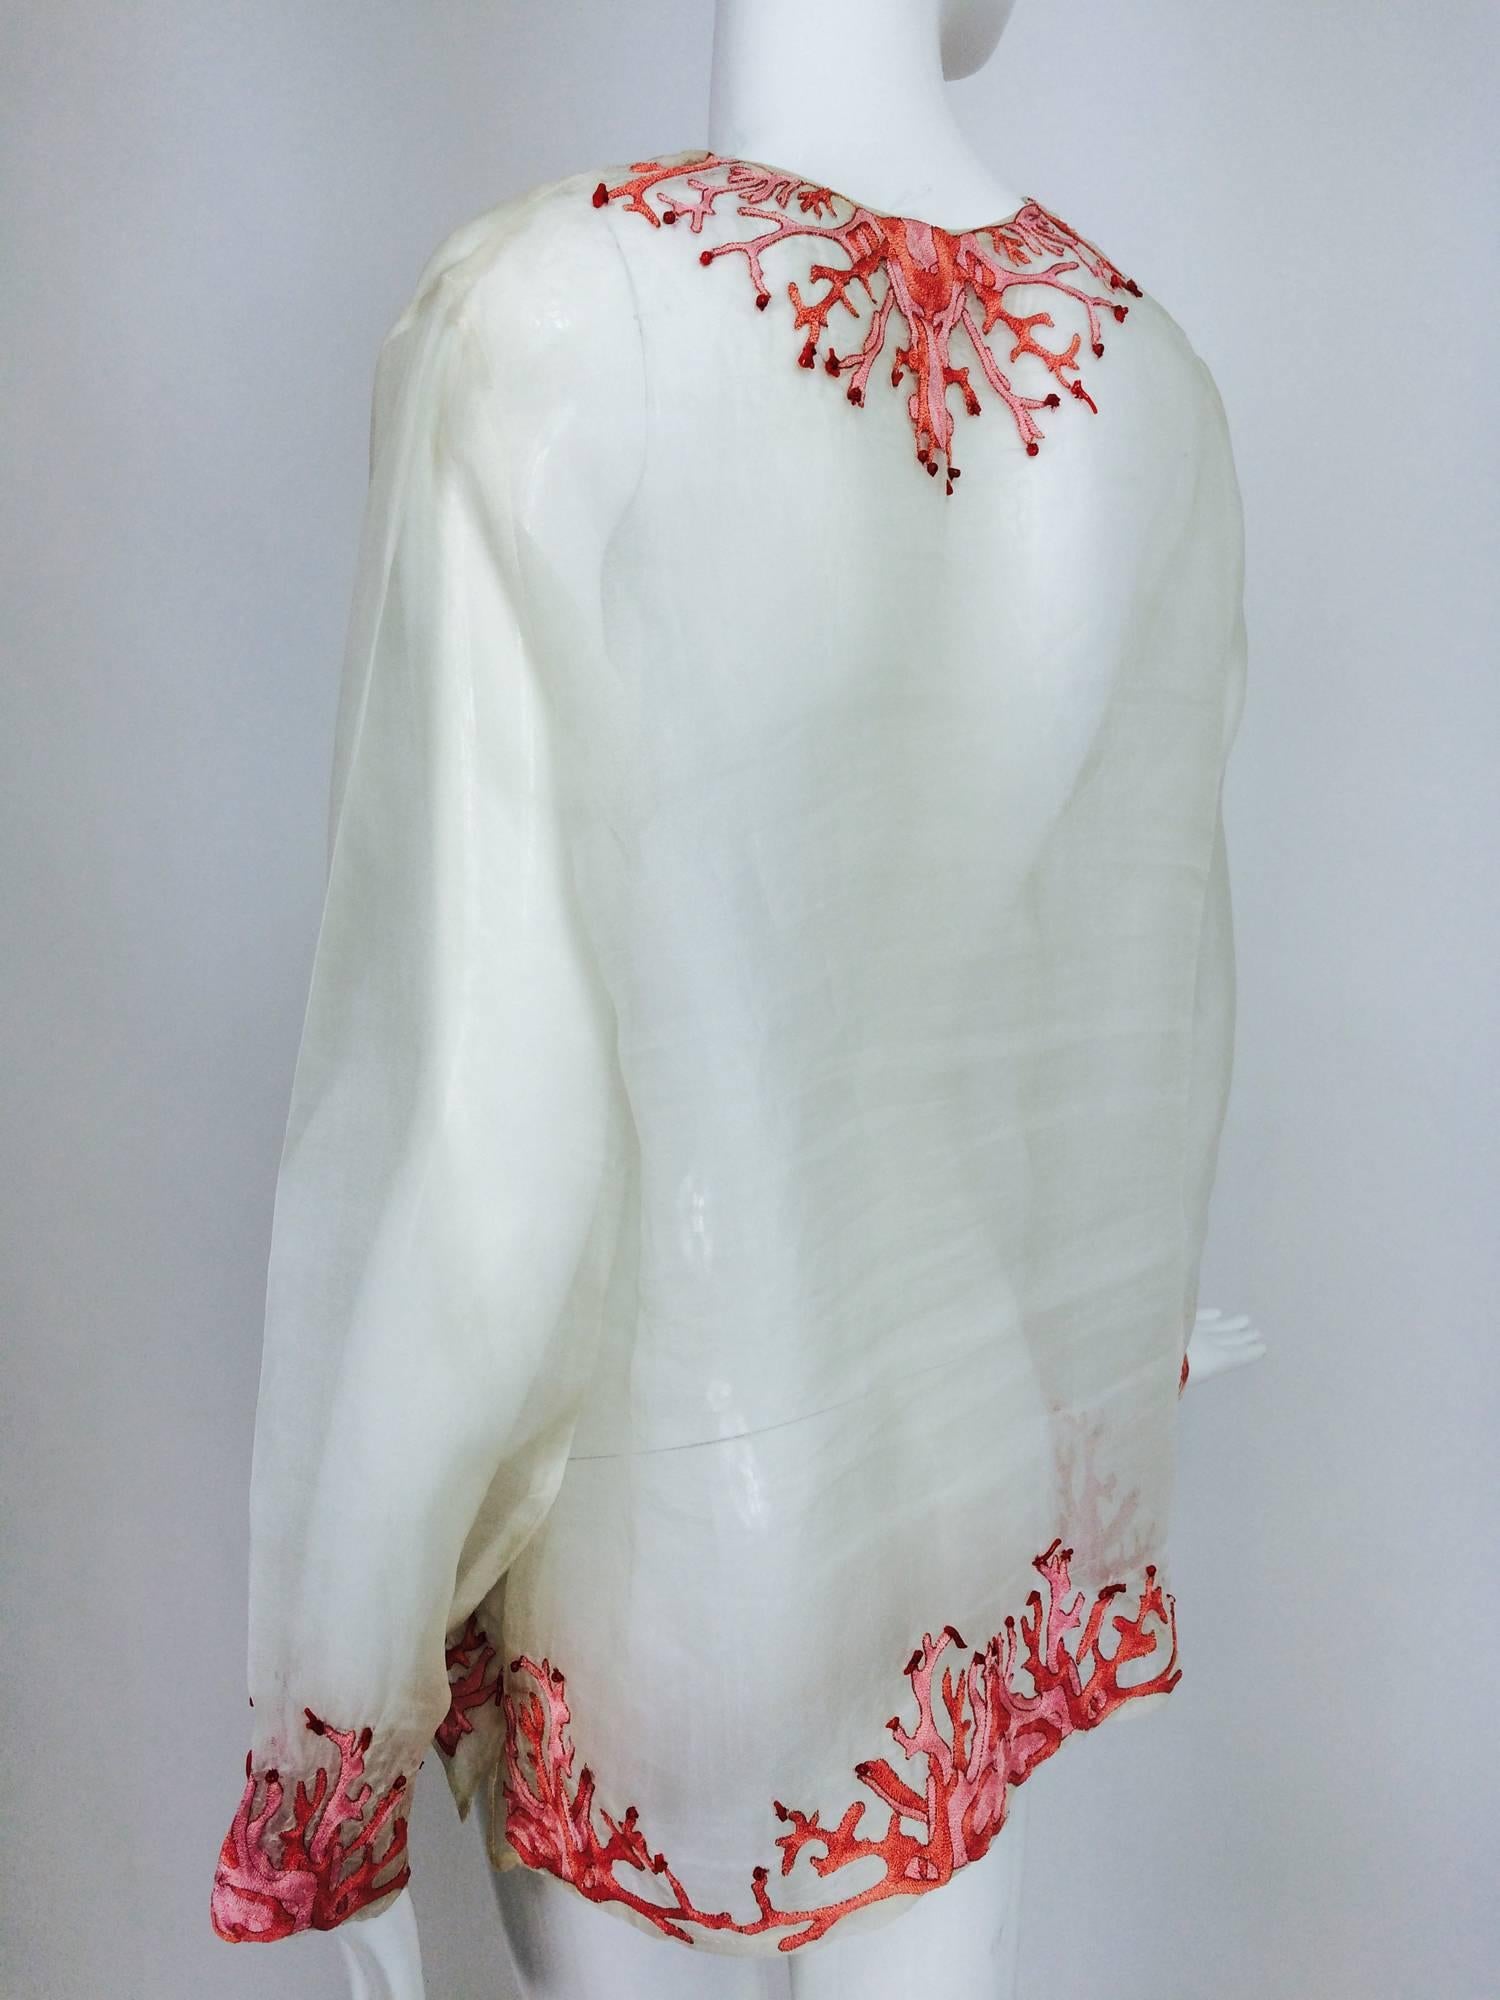 Gray Jeannie McQueeny white silk organza coral embroidered tunic top